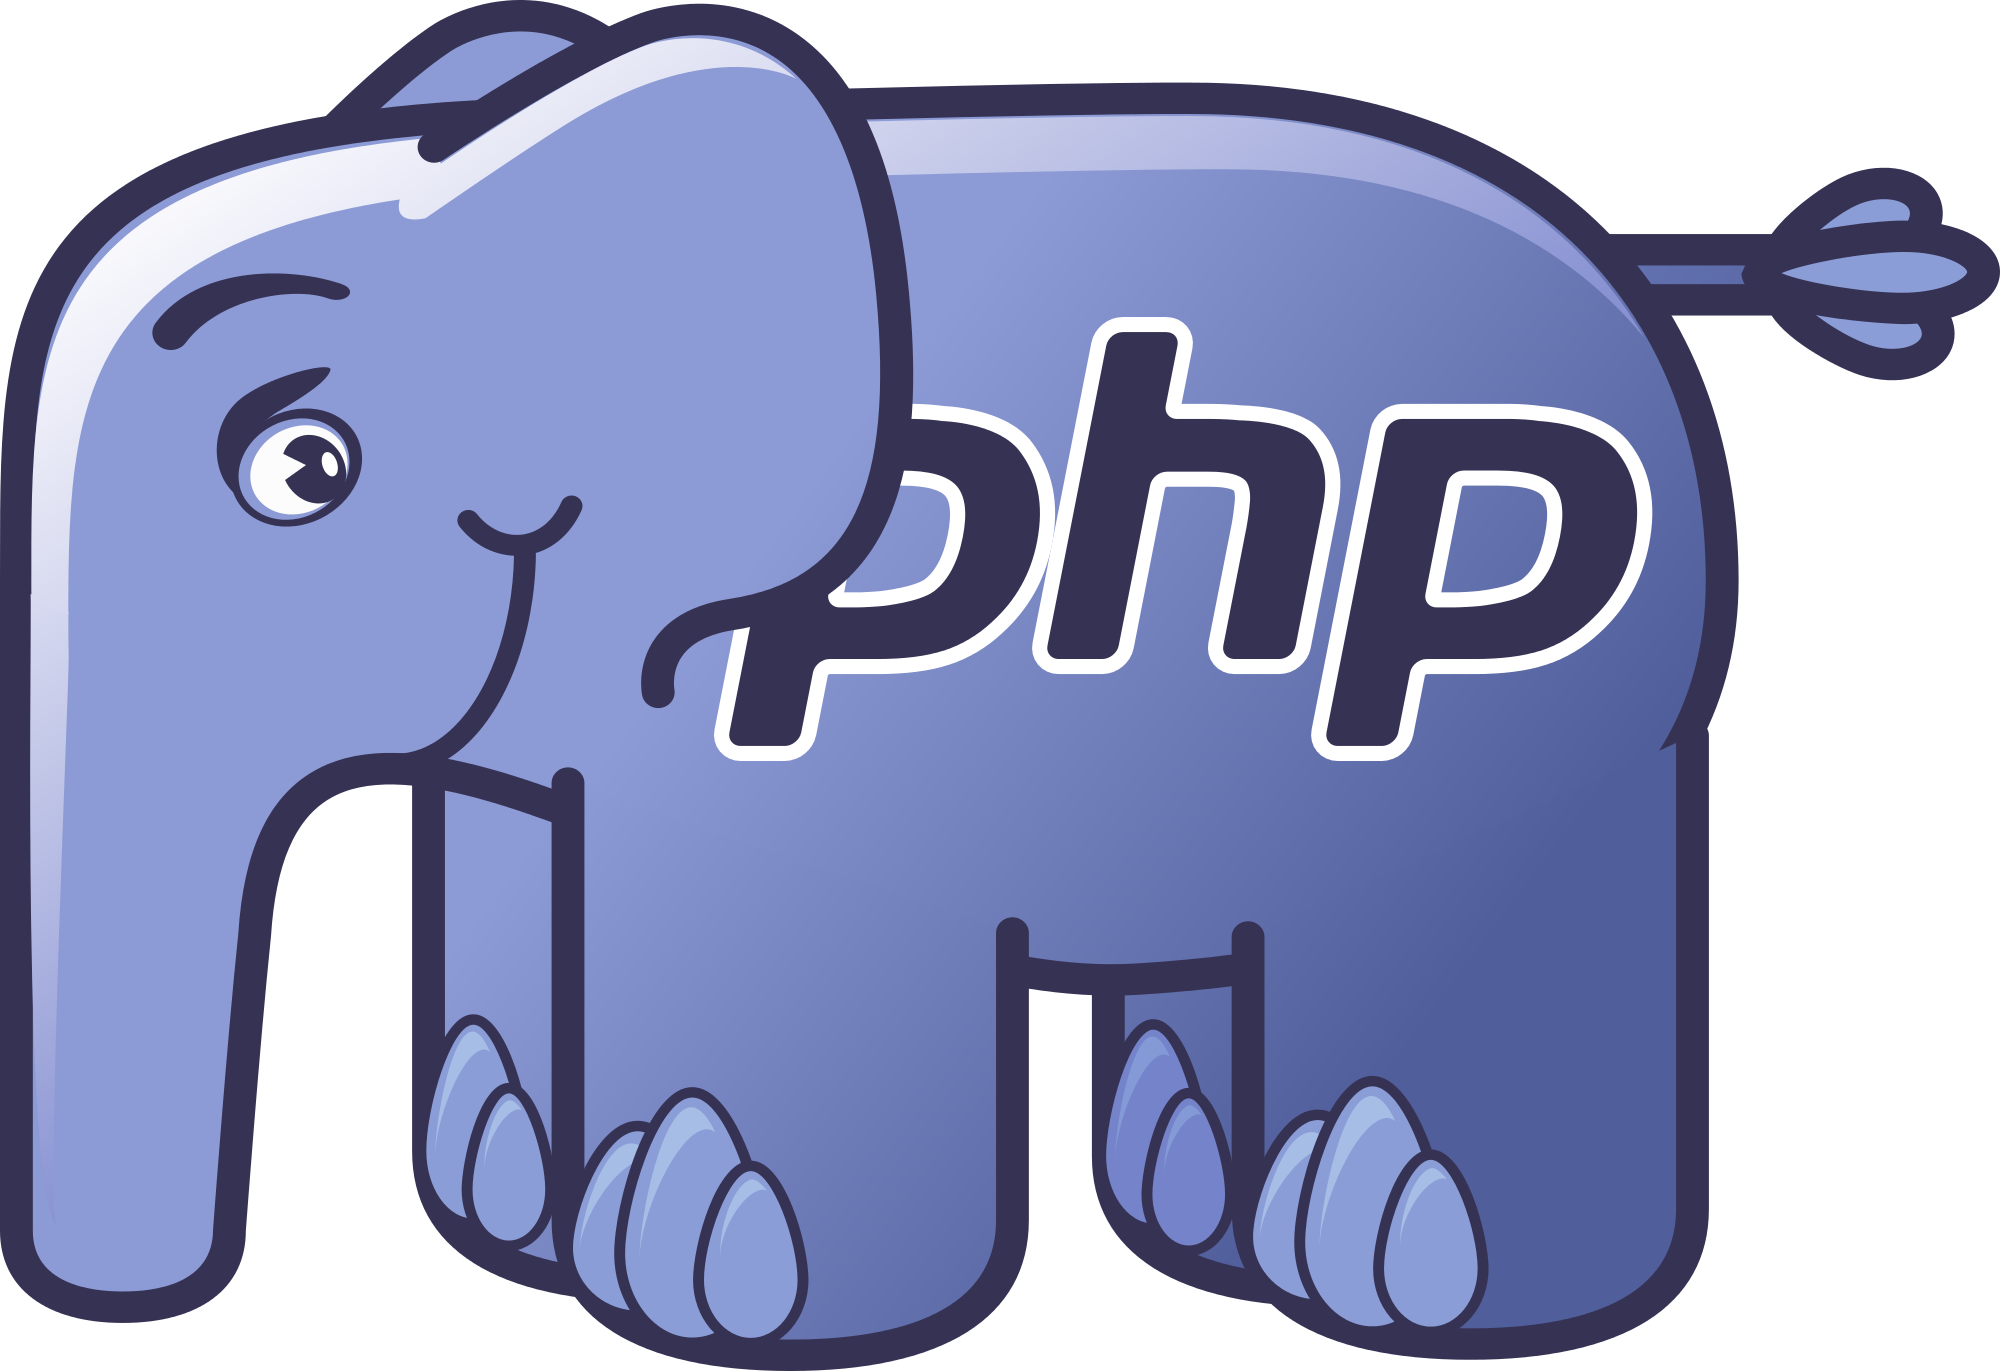 PHPLang: The Versatile Language for Dynamic Web Development